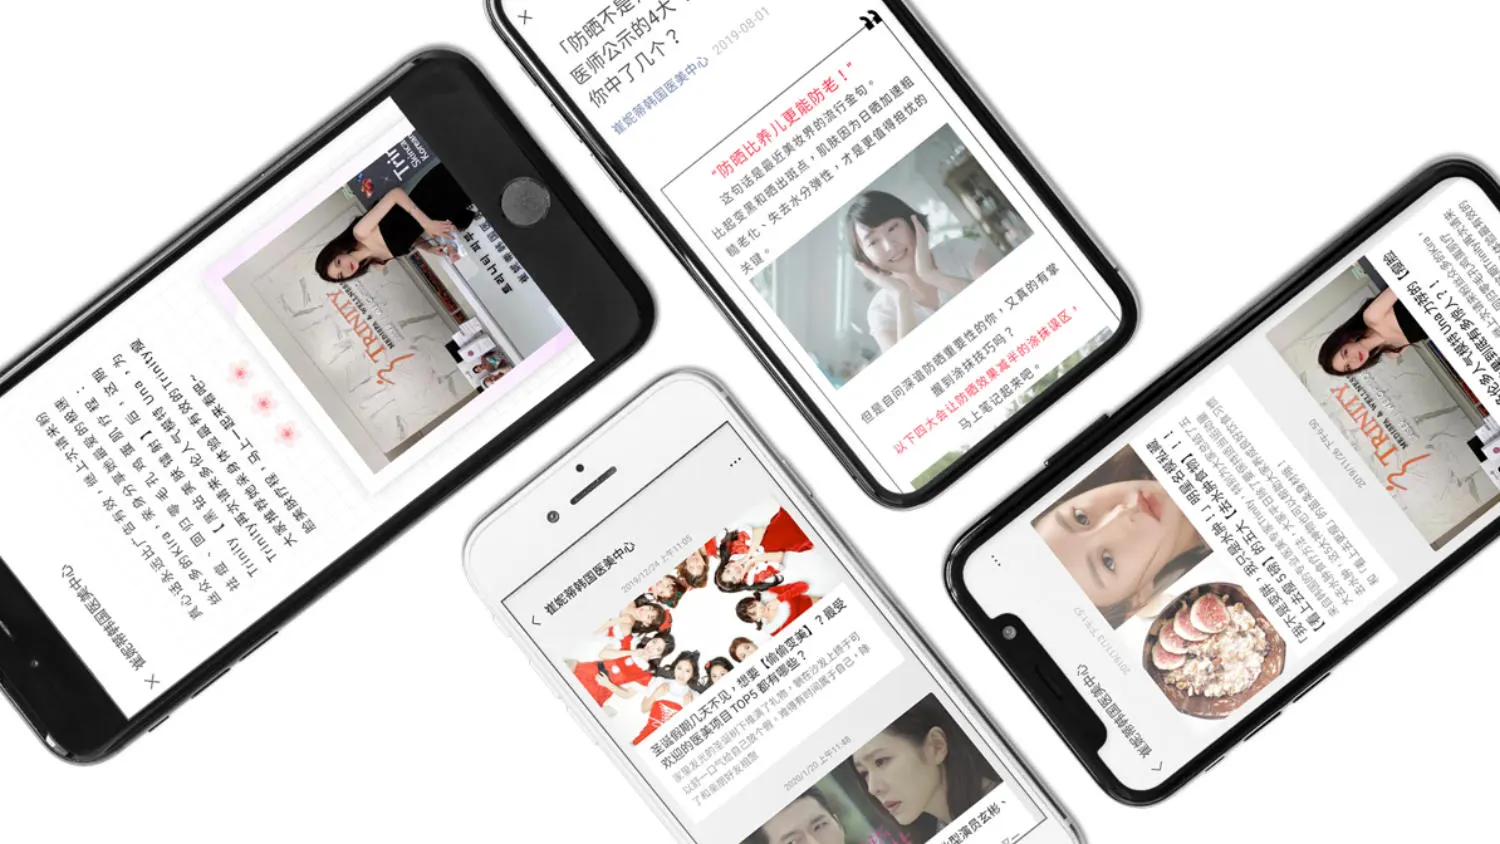 Digital marketing project for TRINITYMEDISPA 崔妮蒂韓國醫美中心. Planned and executed digital banners